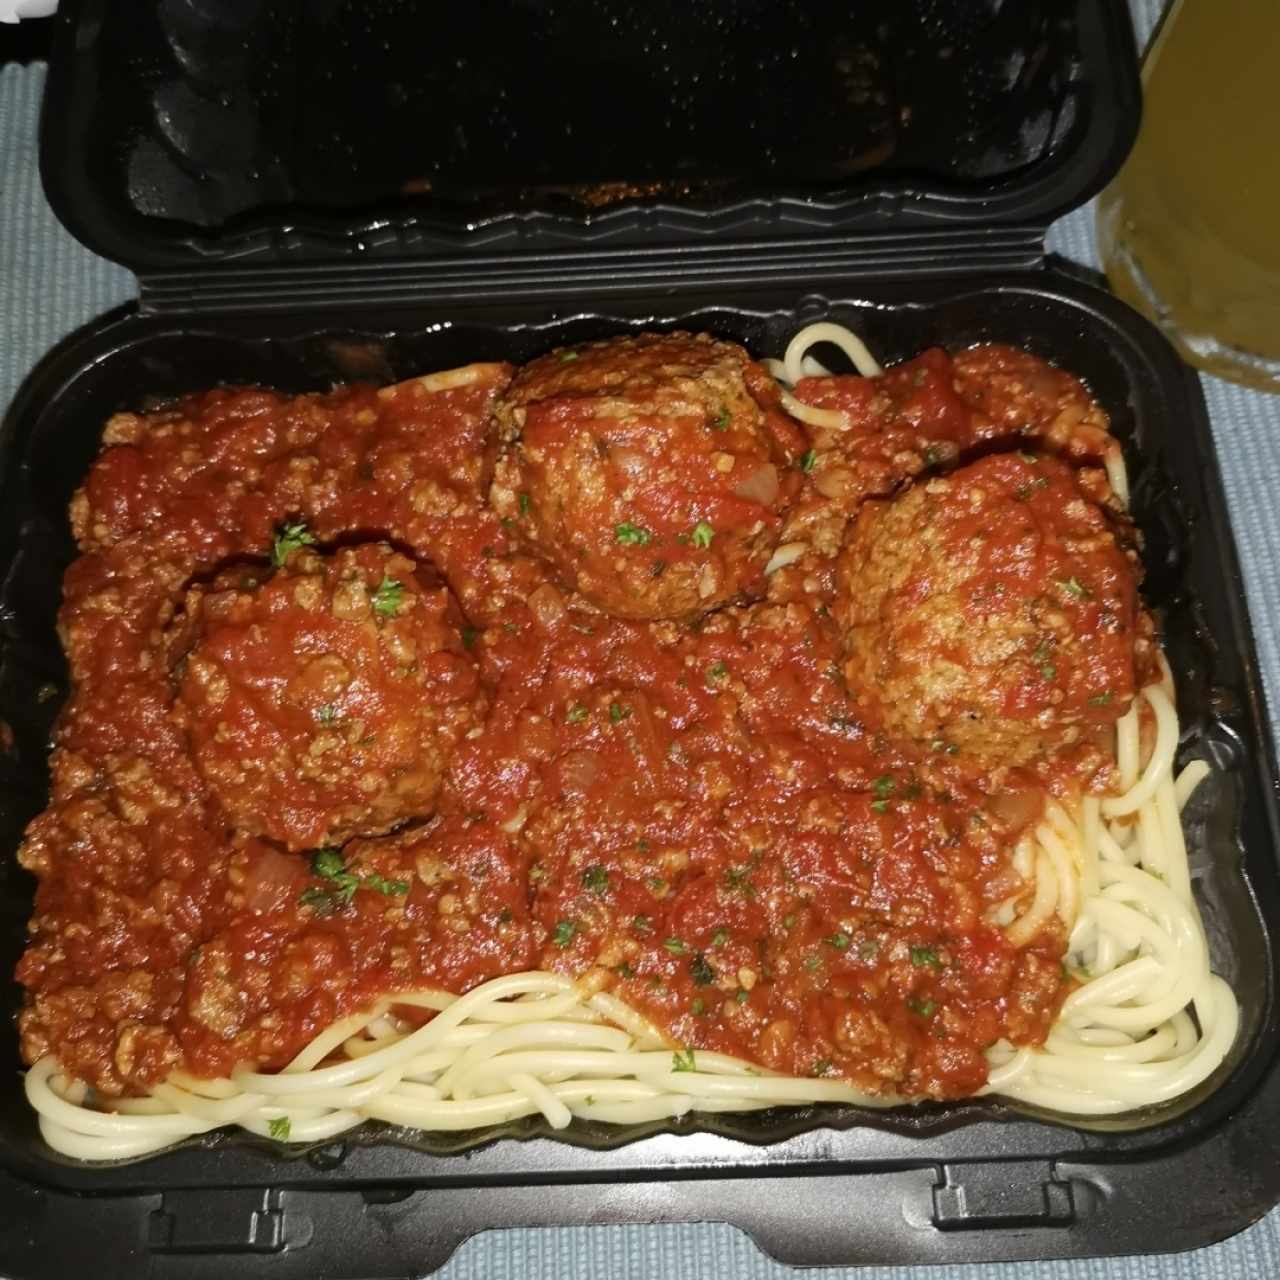 Spaghetti albondiga marinara